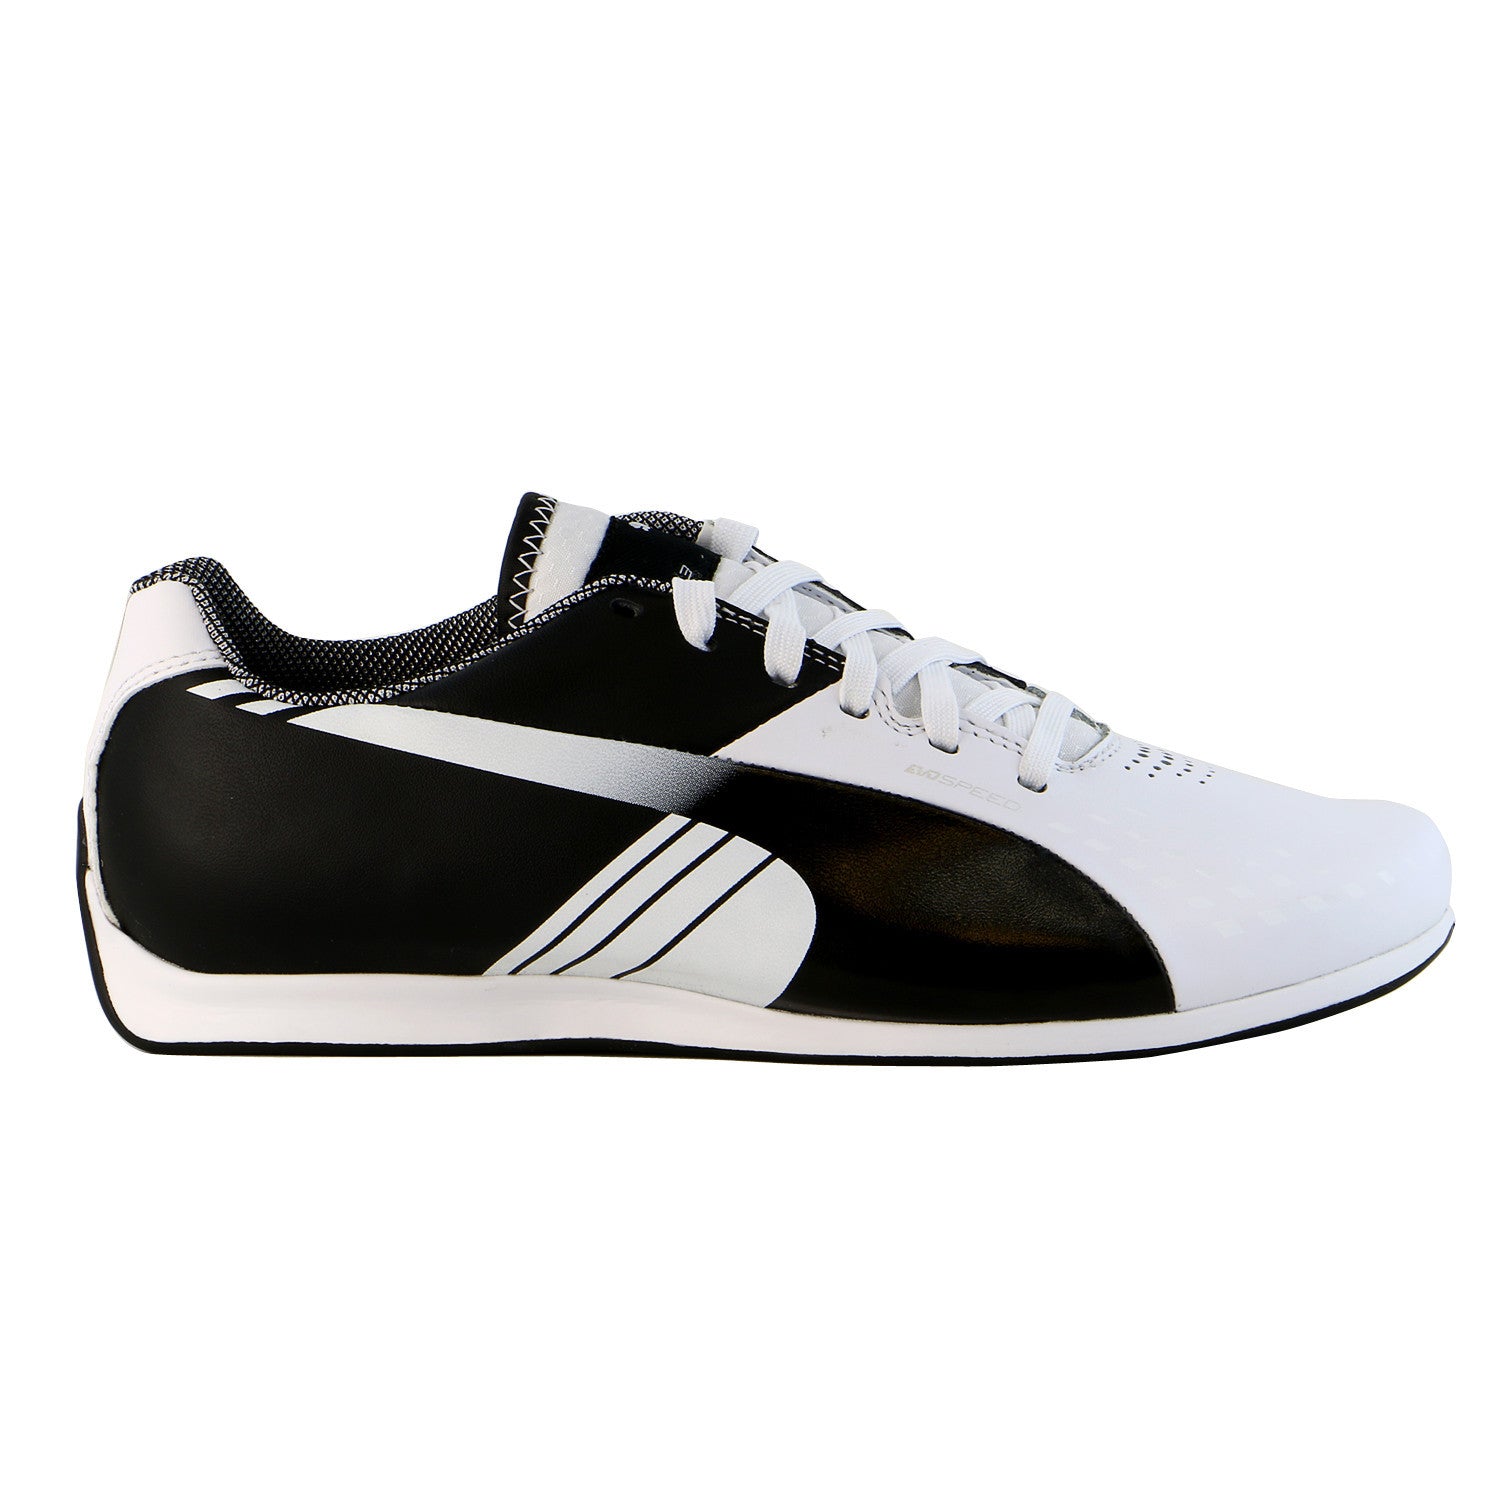 Puma evoSpeed 1.3 Lo Motorsport Fashion - White/Steel Gray/Black -